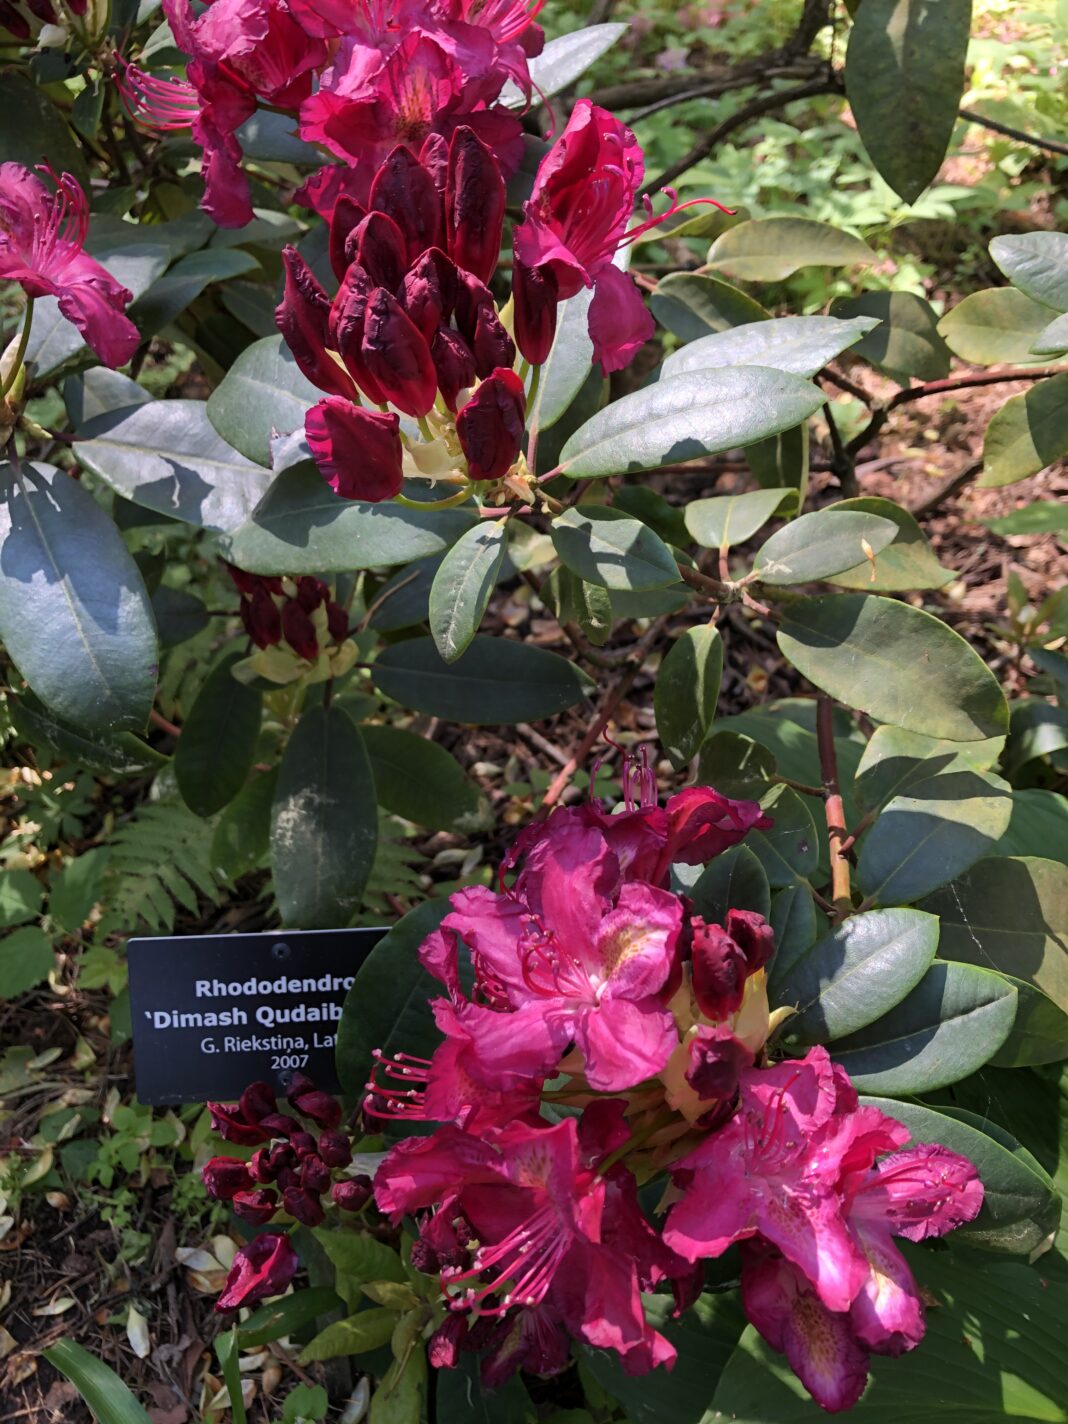 Rhododendron variety Dimash Qudaibergen will be given to the Botanical Garden of Nur-Sultan